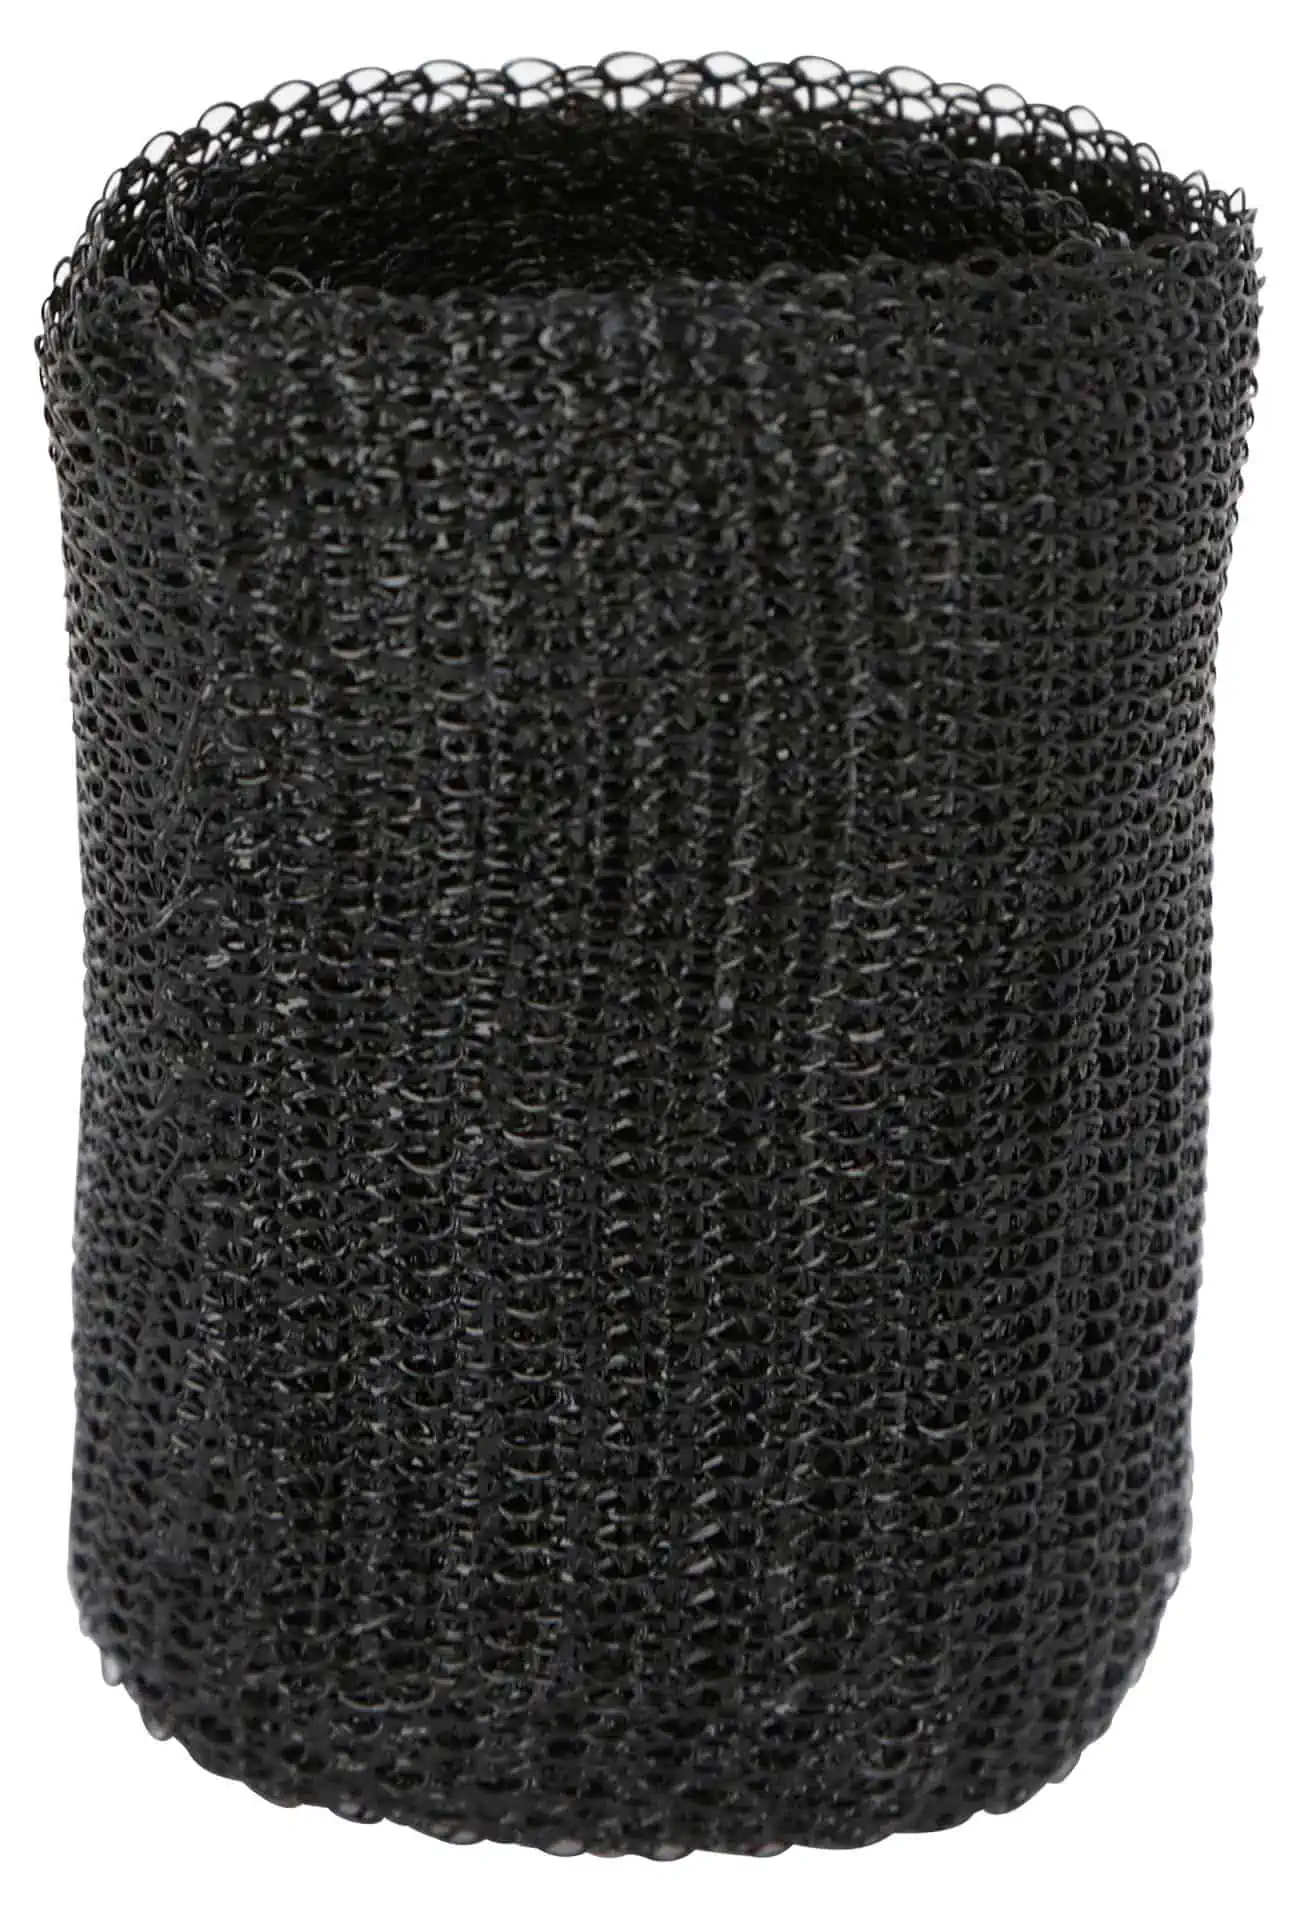 TechnoCast, Cast + Support Dressg, 7.5 cm x 3.6 m, black